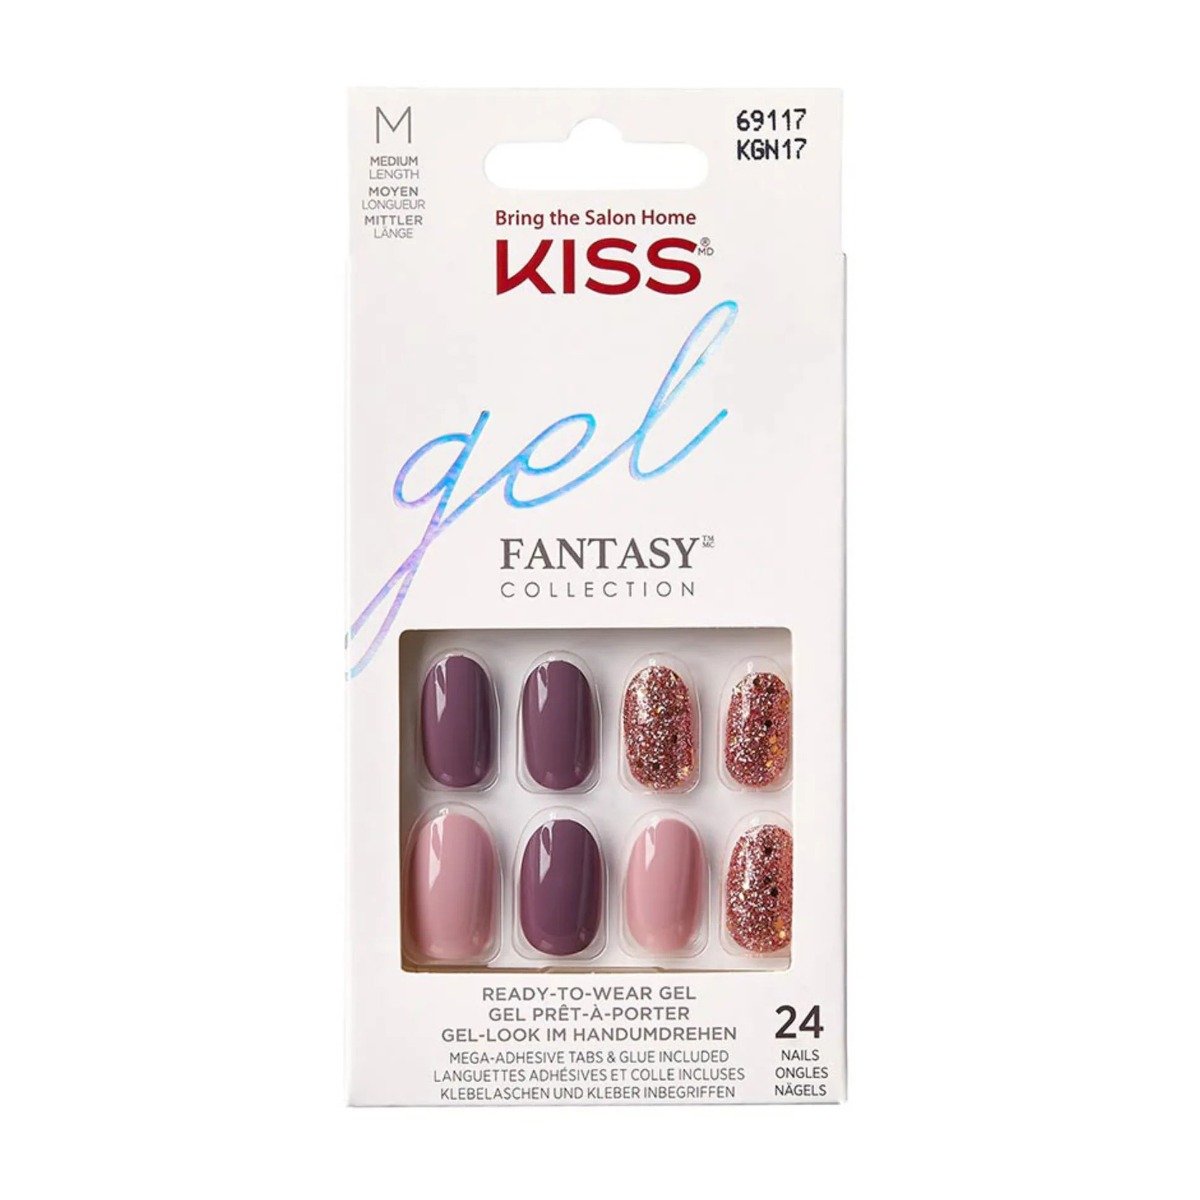 Kiss Gel Fantasy kGN17C Nails – 69117 - Bloom Pharmacy